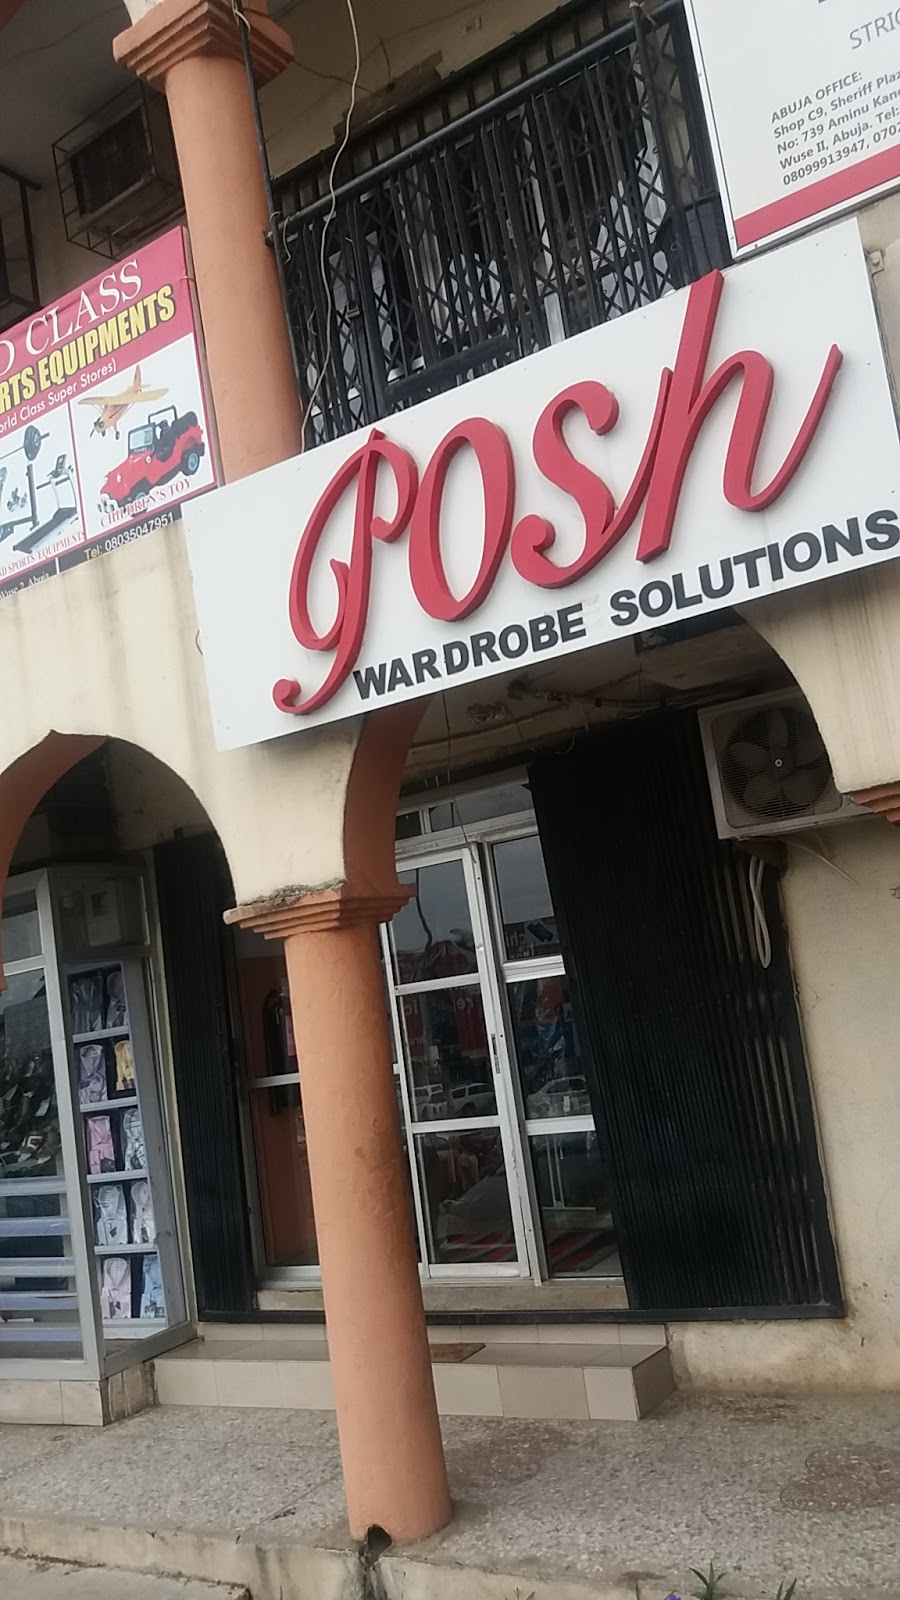 Posh Wardrobe Solutions